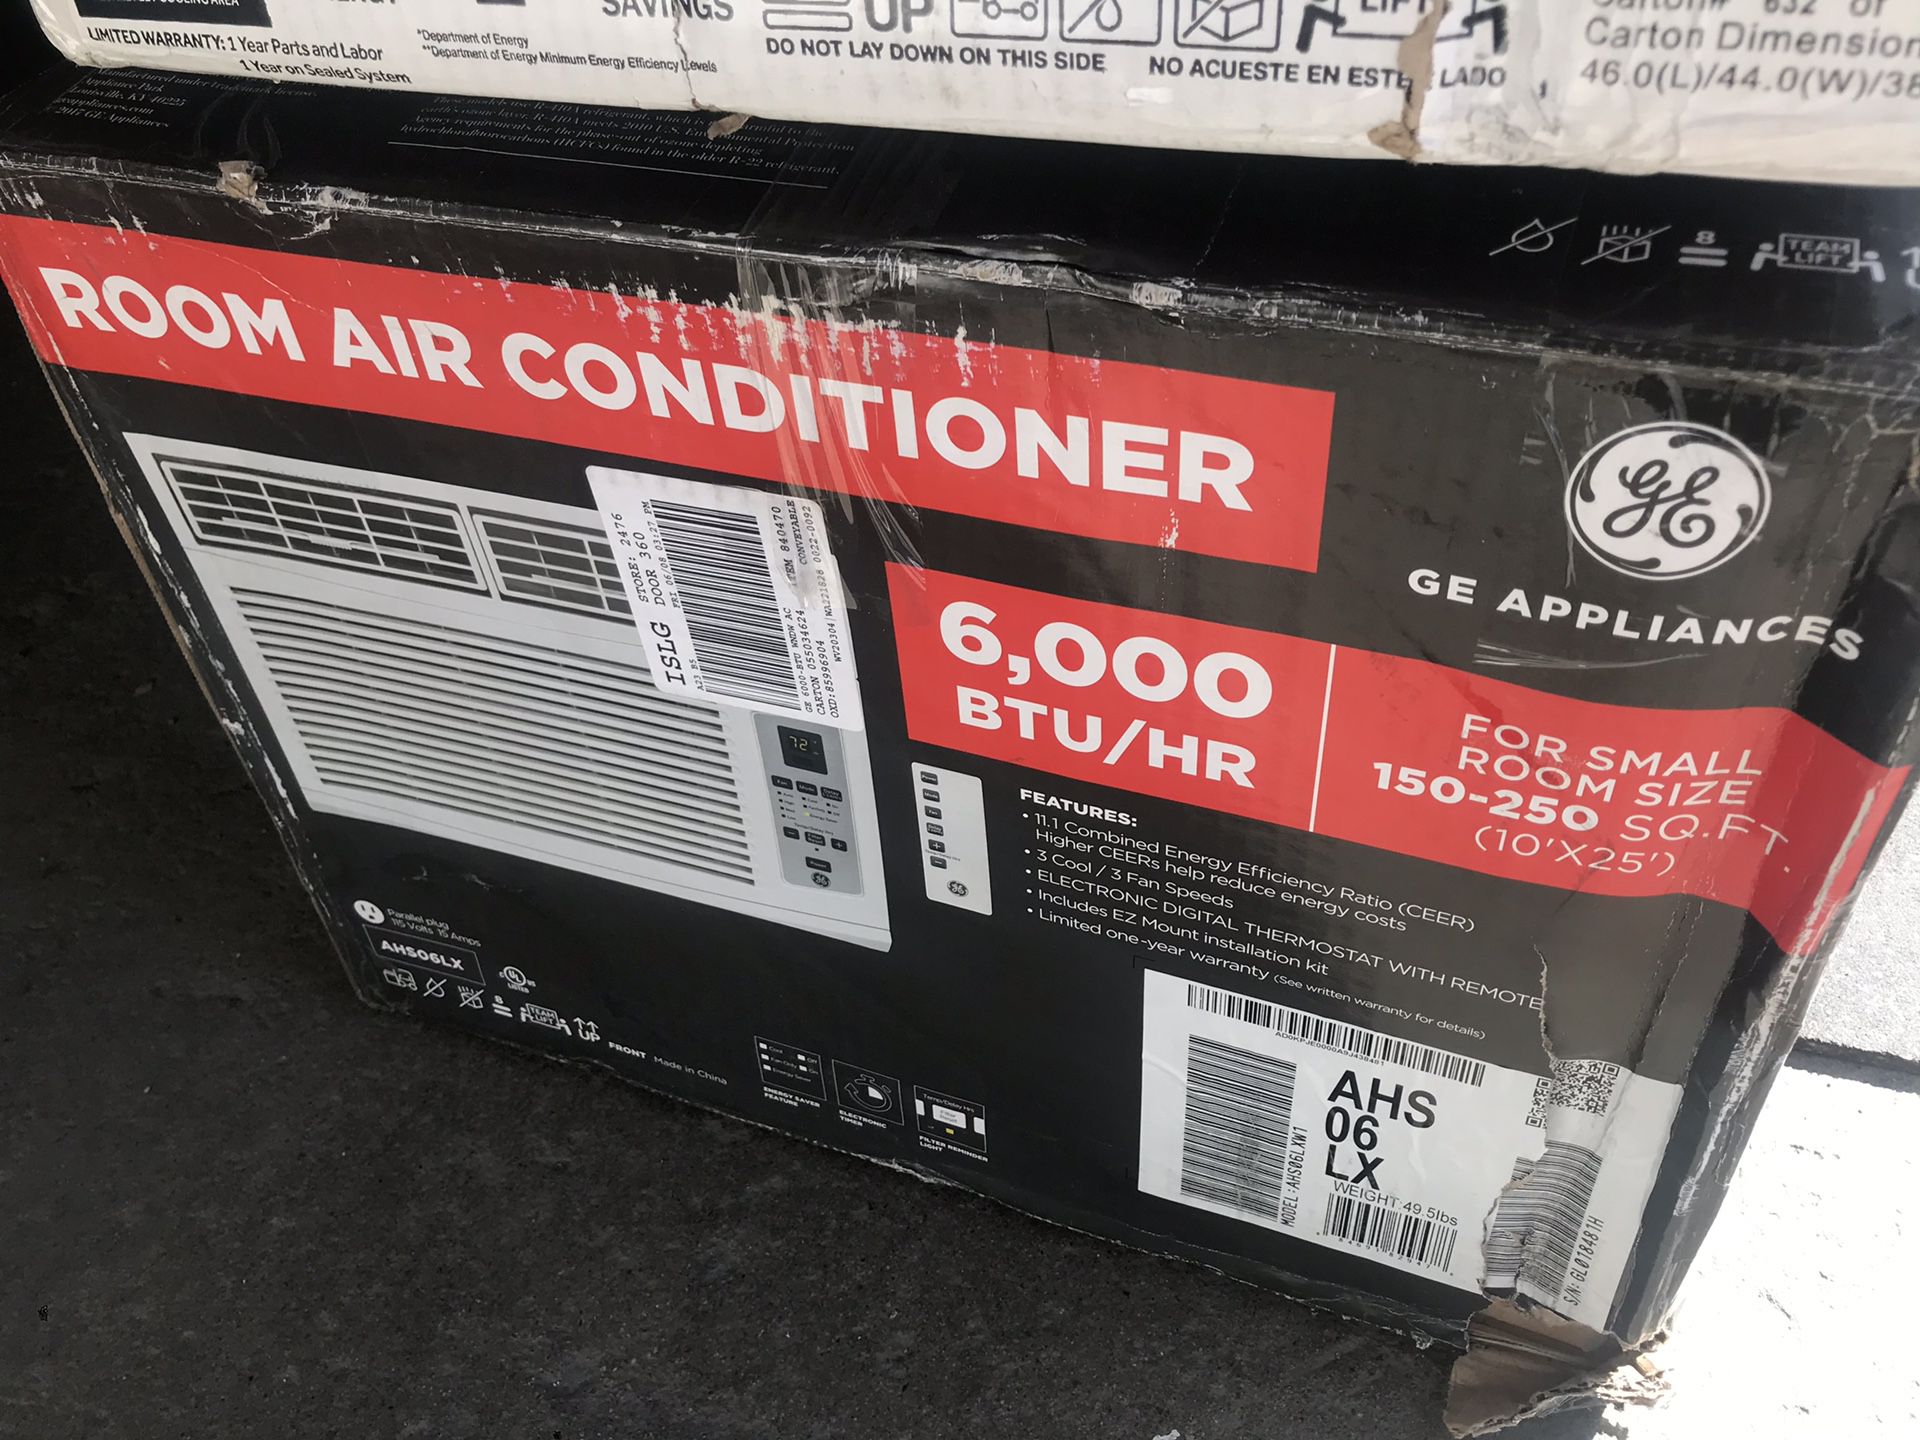 NEW IN BOX GE 6000 BTU air conditioner